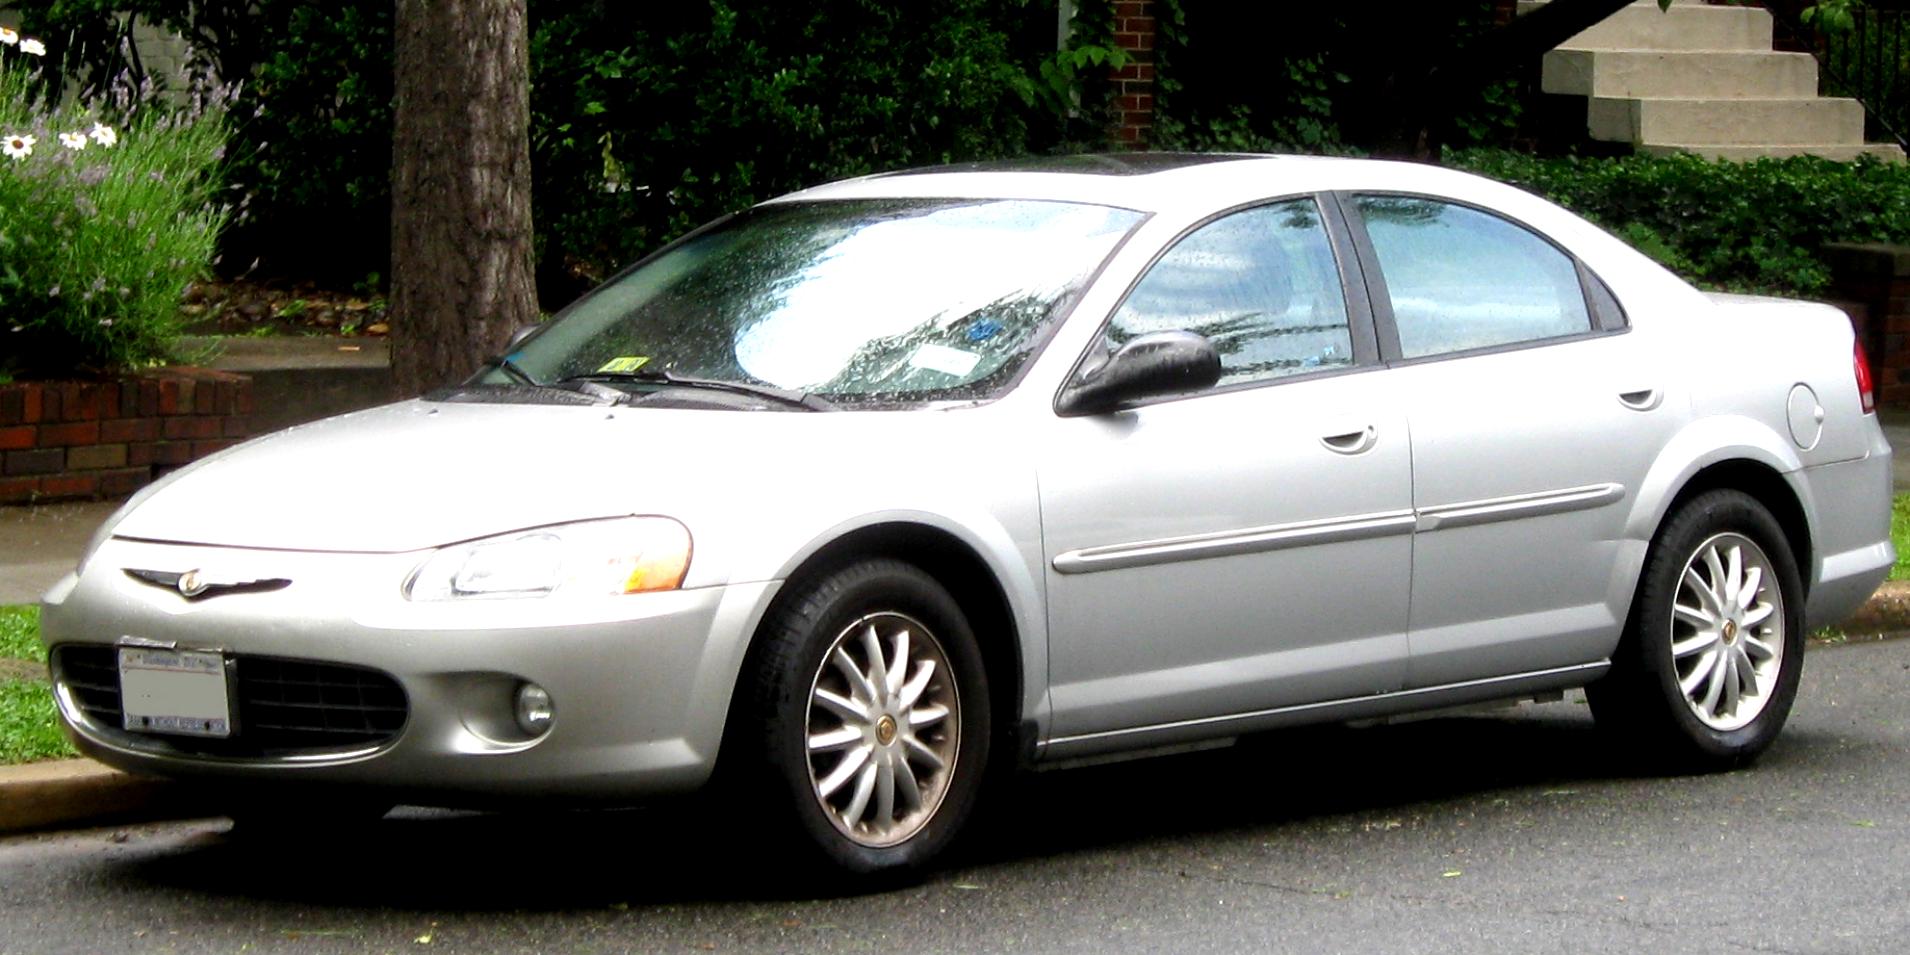 Chrysler Pacifica 2003 #54